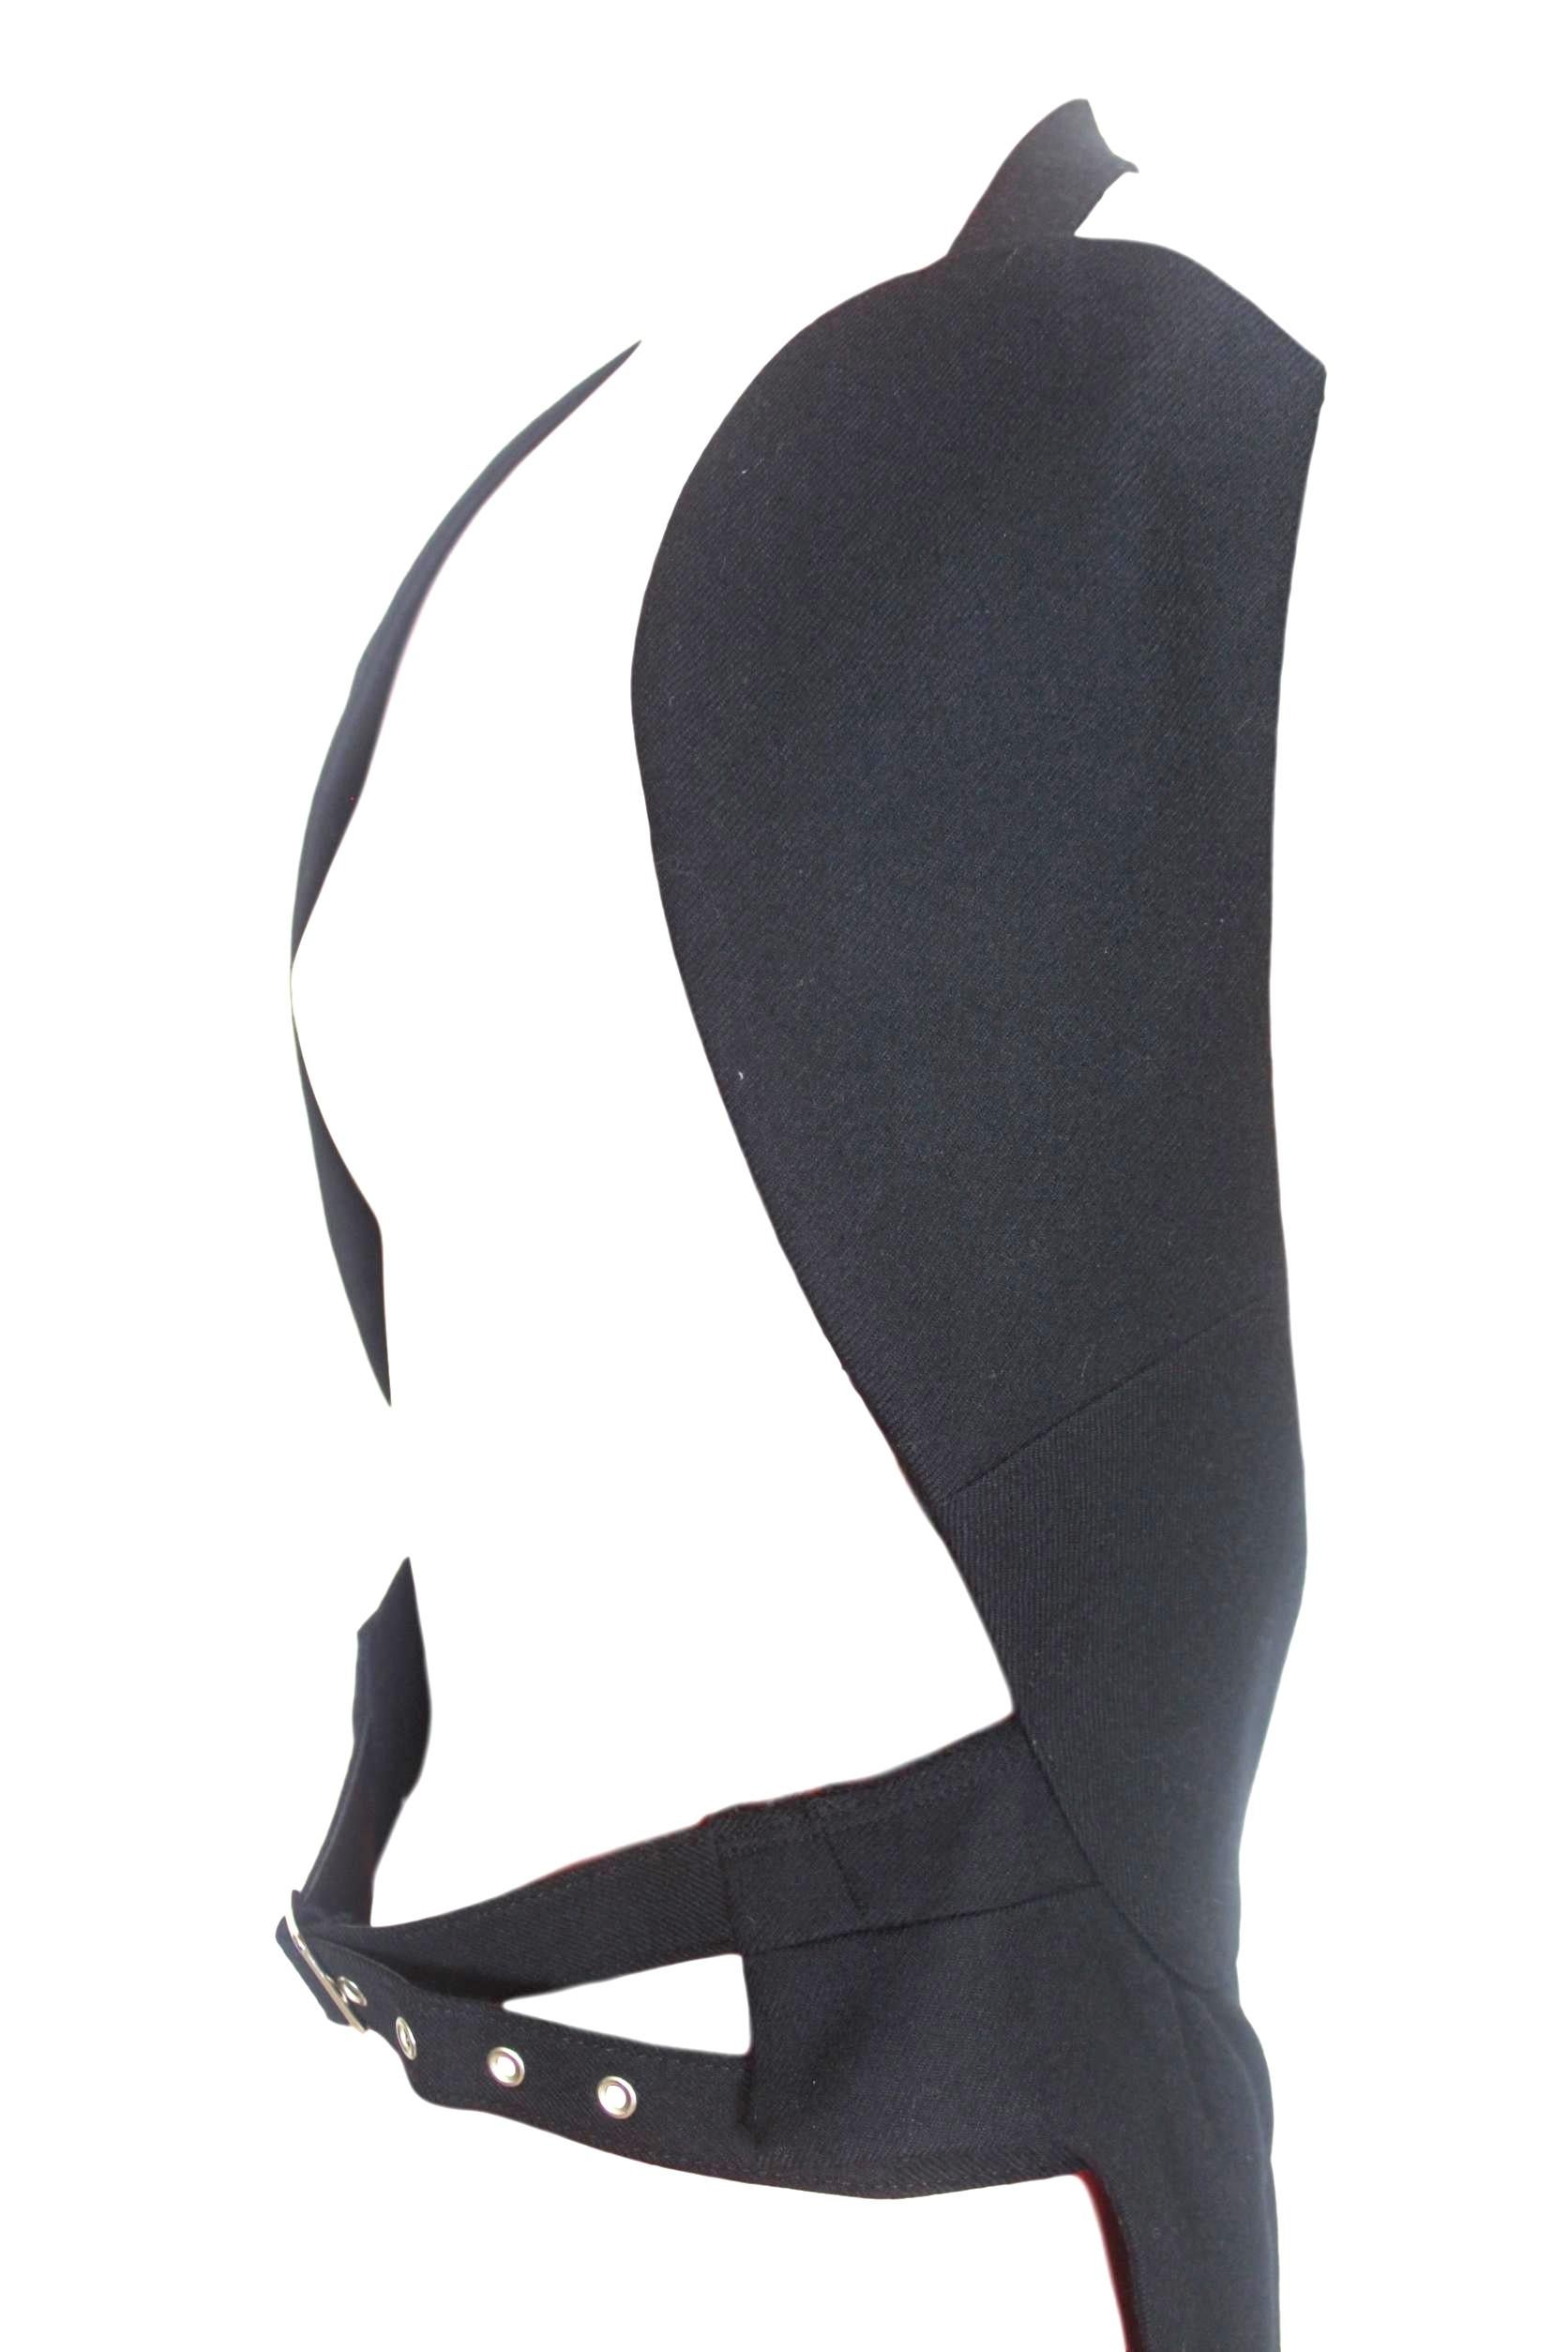 Comme des Garcons 2009 Collection Vest with Tails For Sale 3